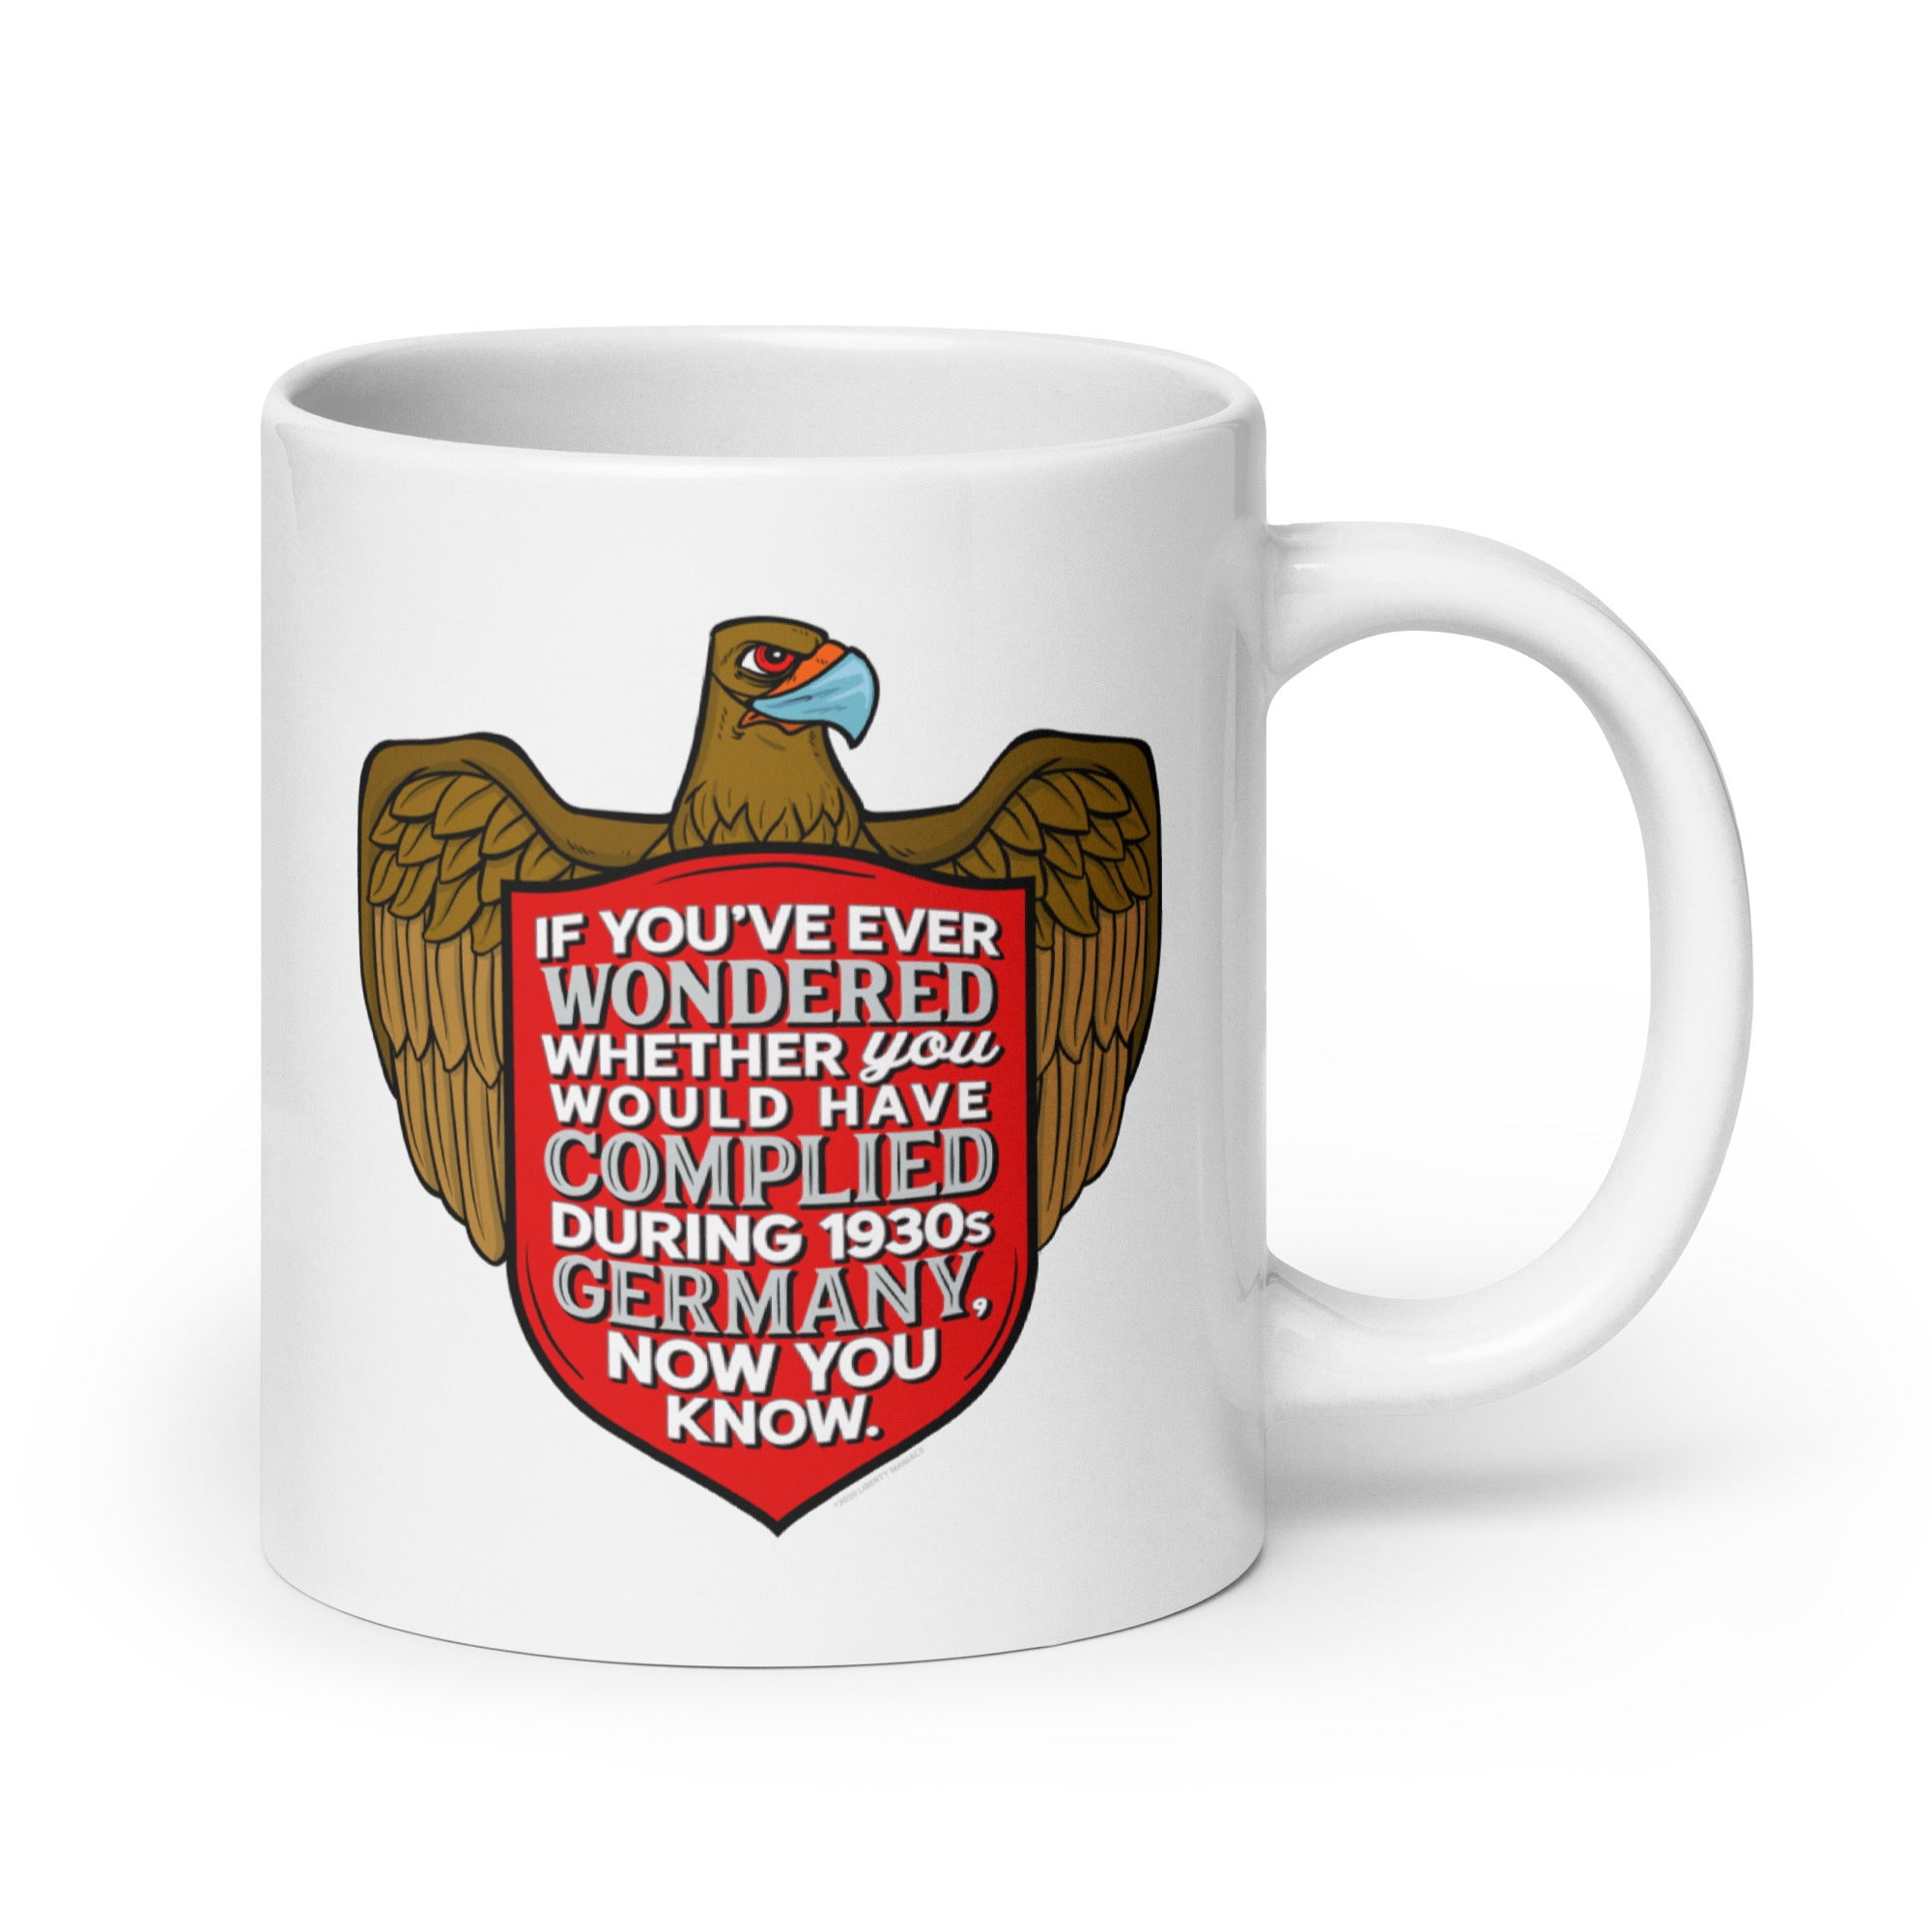 Now You Know Coffee Mug